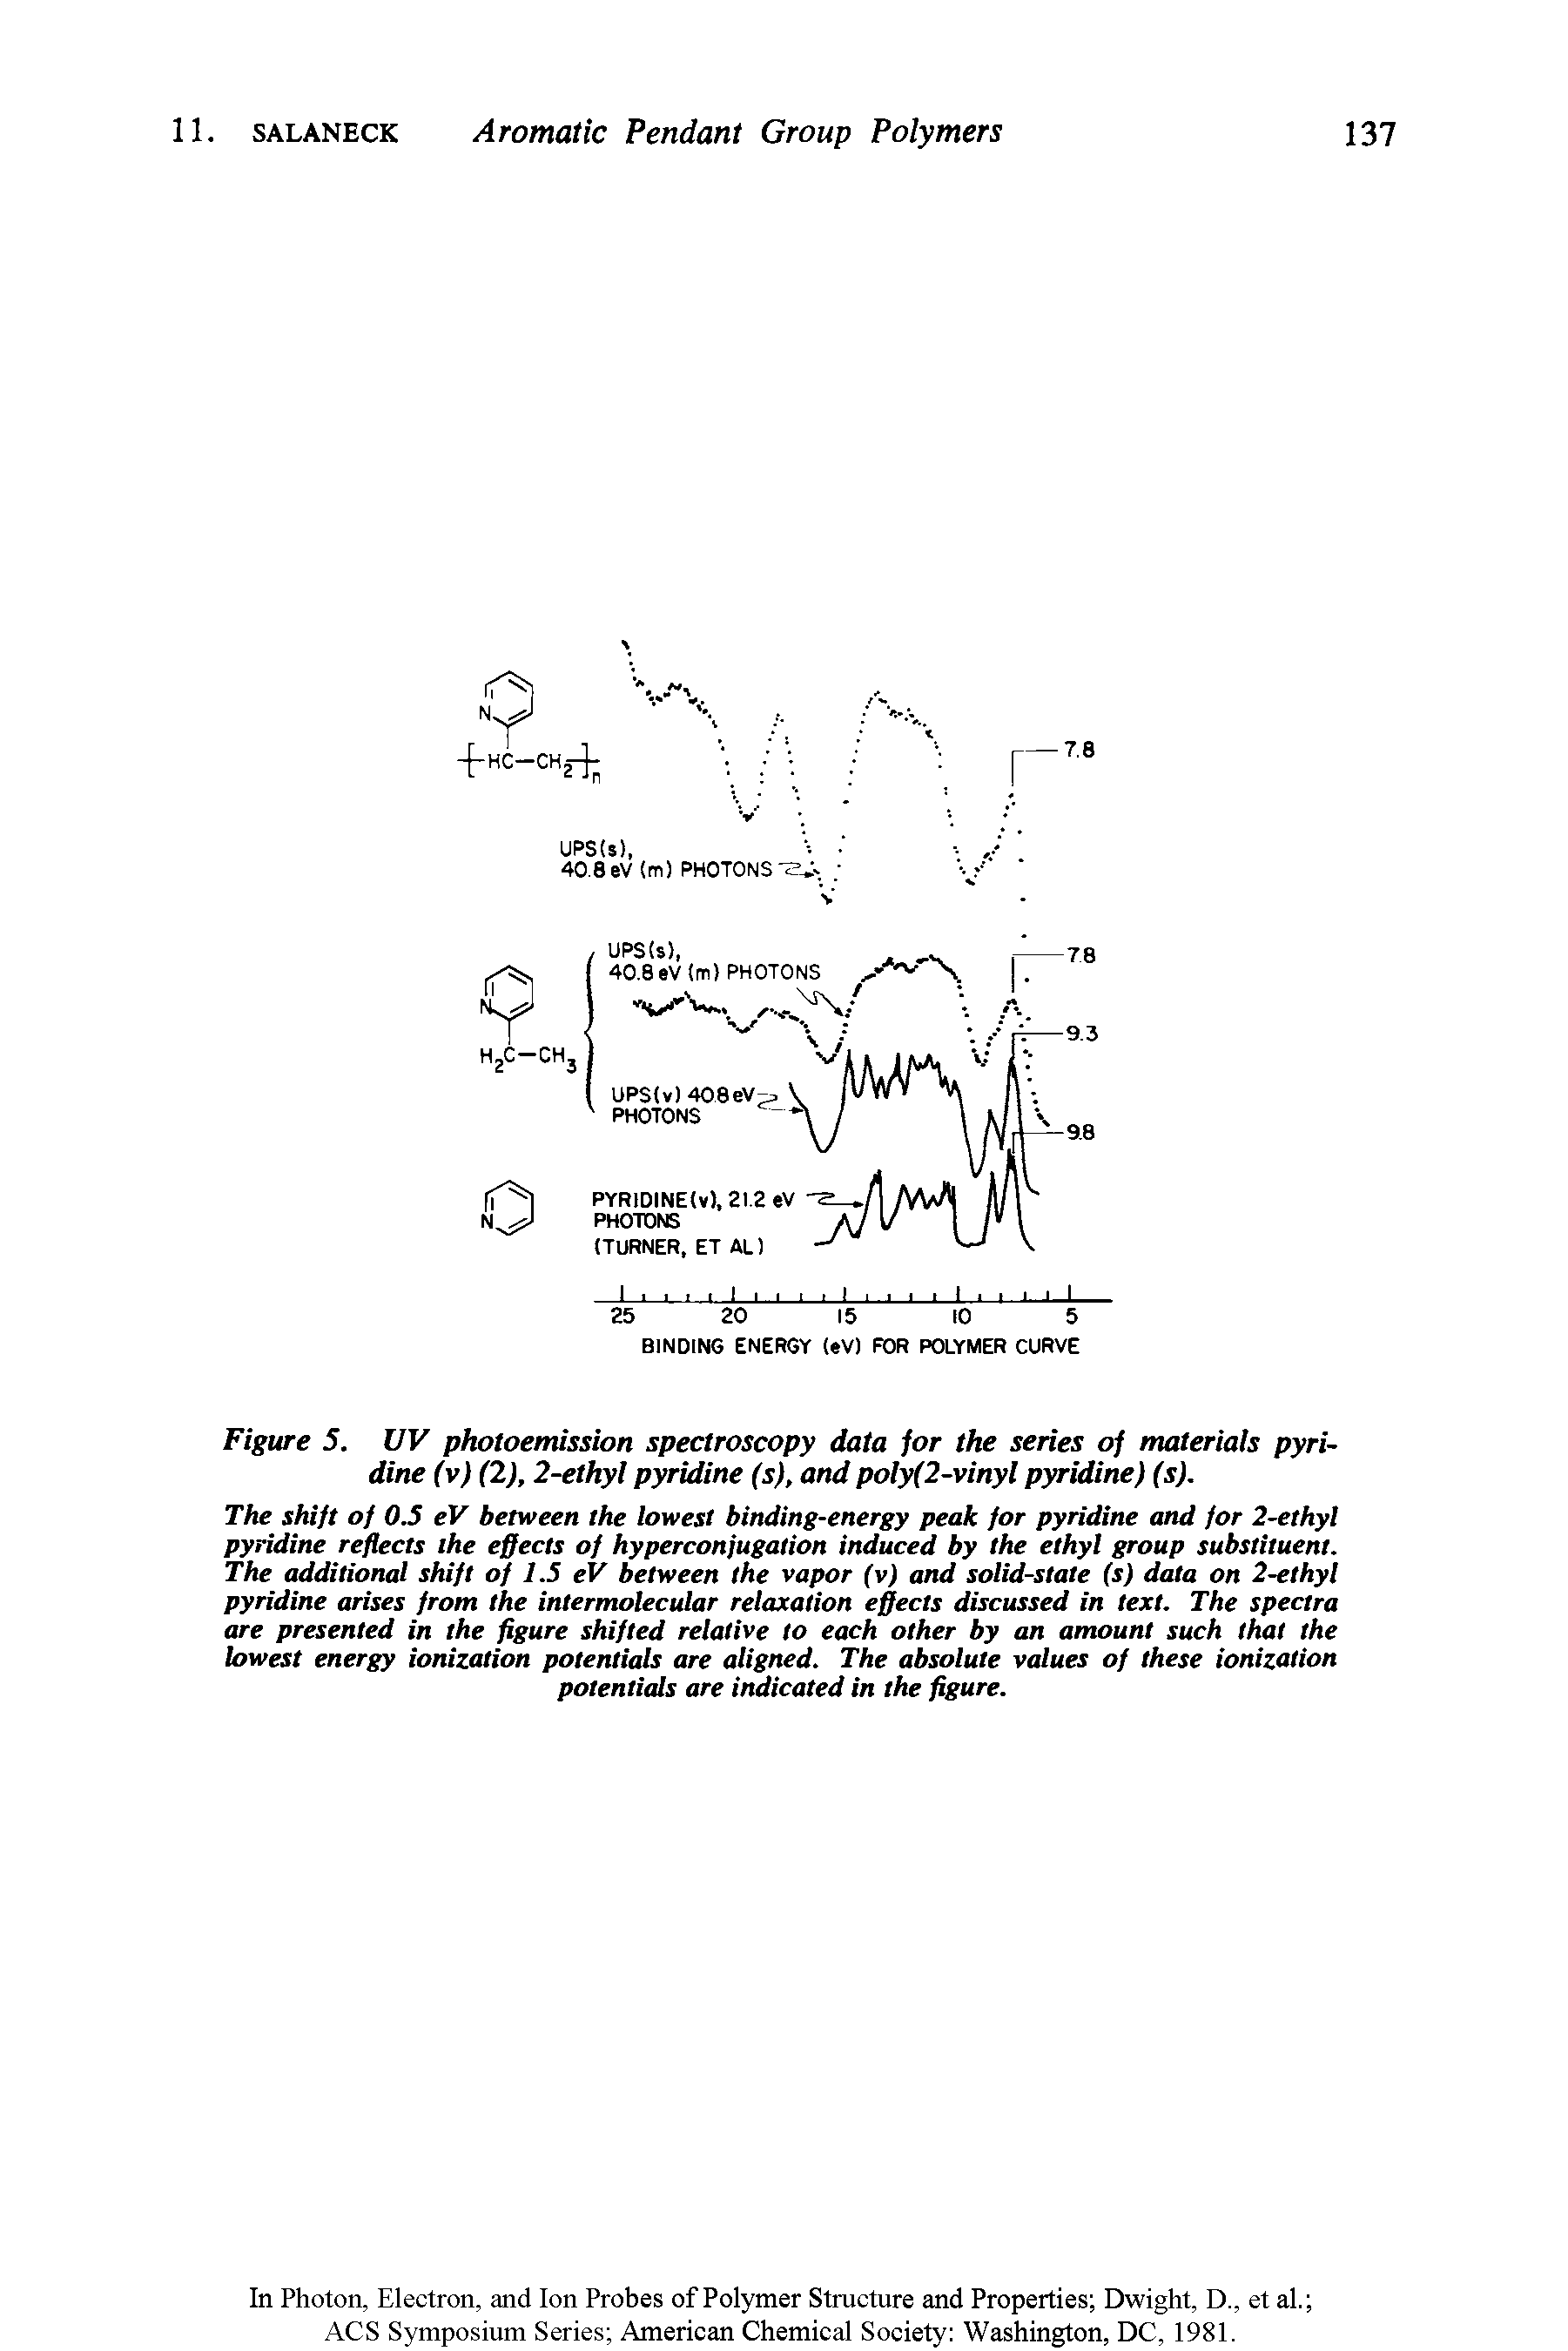 Figure 5. UV photoemission spectroscopy data for the series of materials pyridine (v) (2), 2-ethyl pyridine (s), and poly(2-vinyl pyridine) (s).